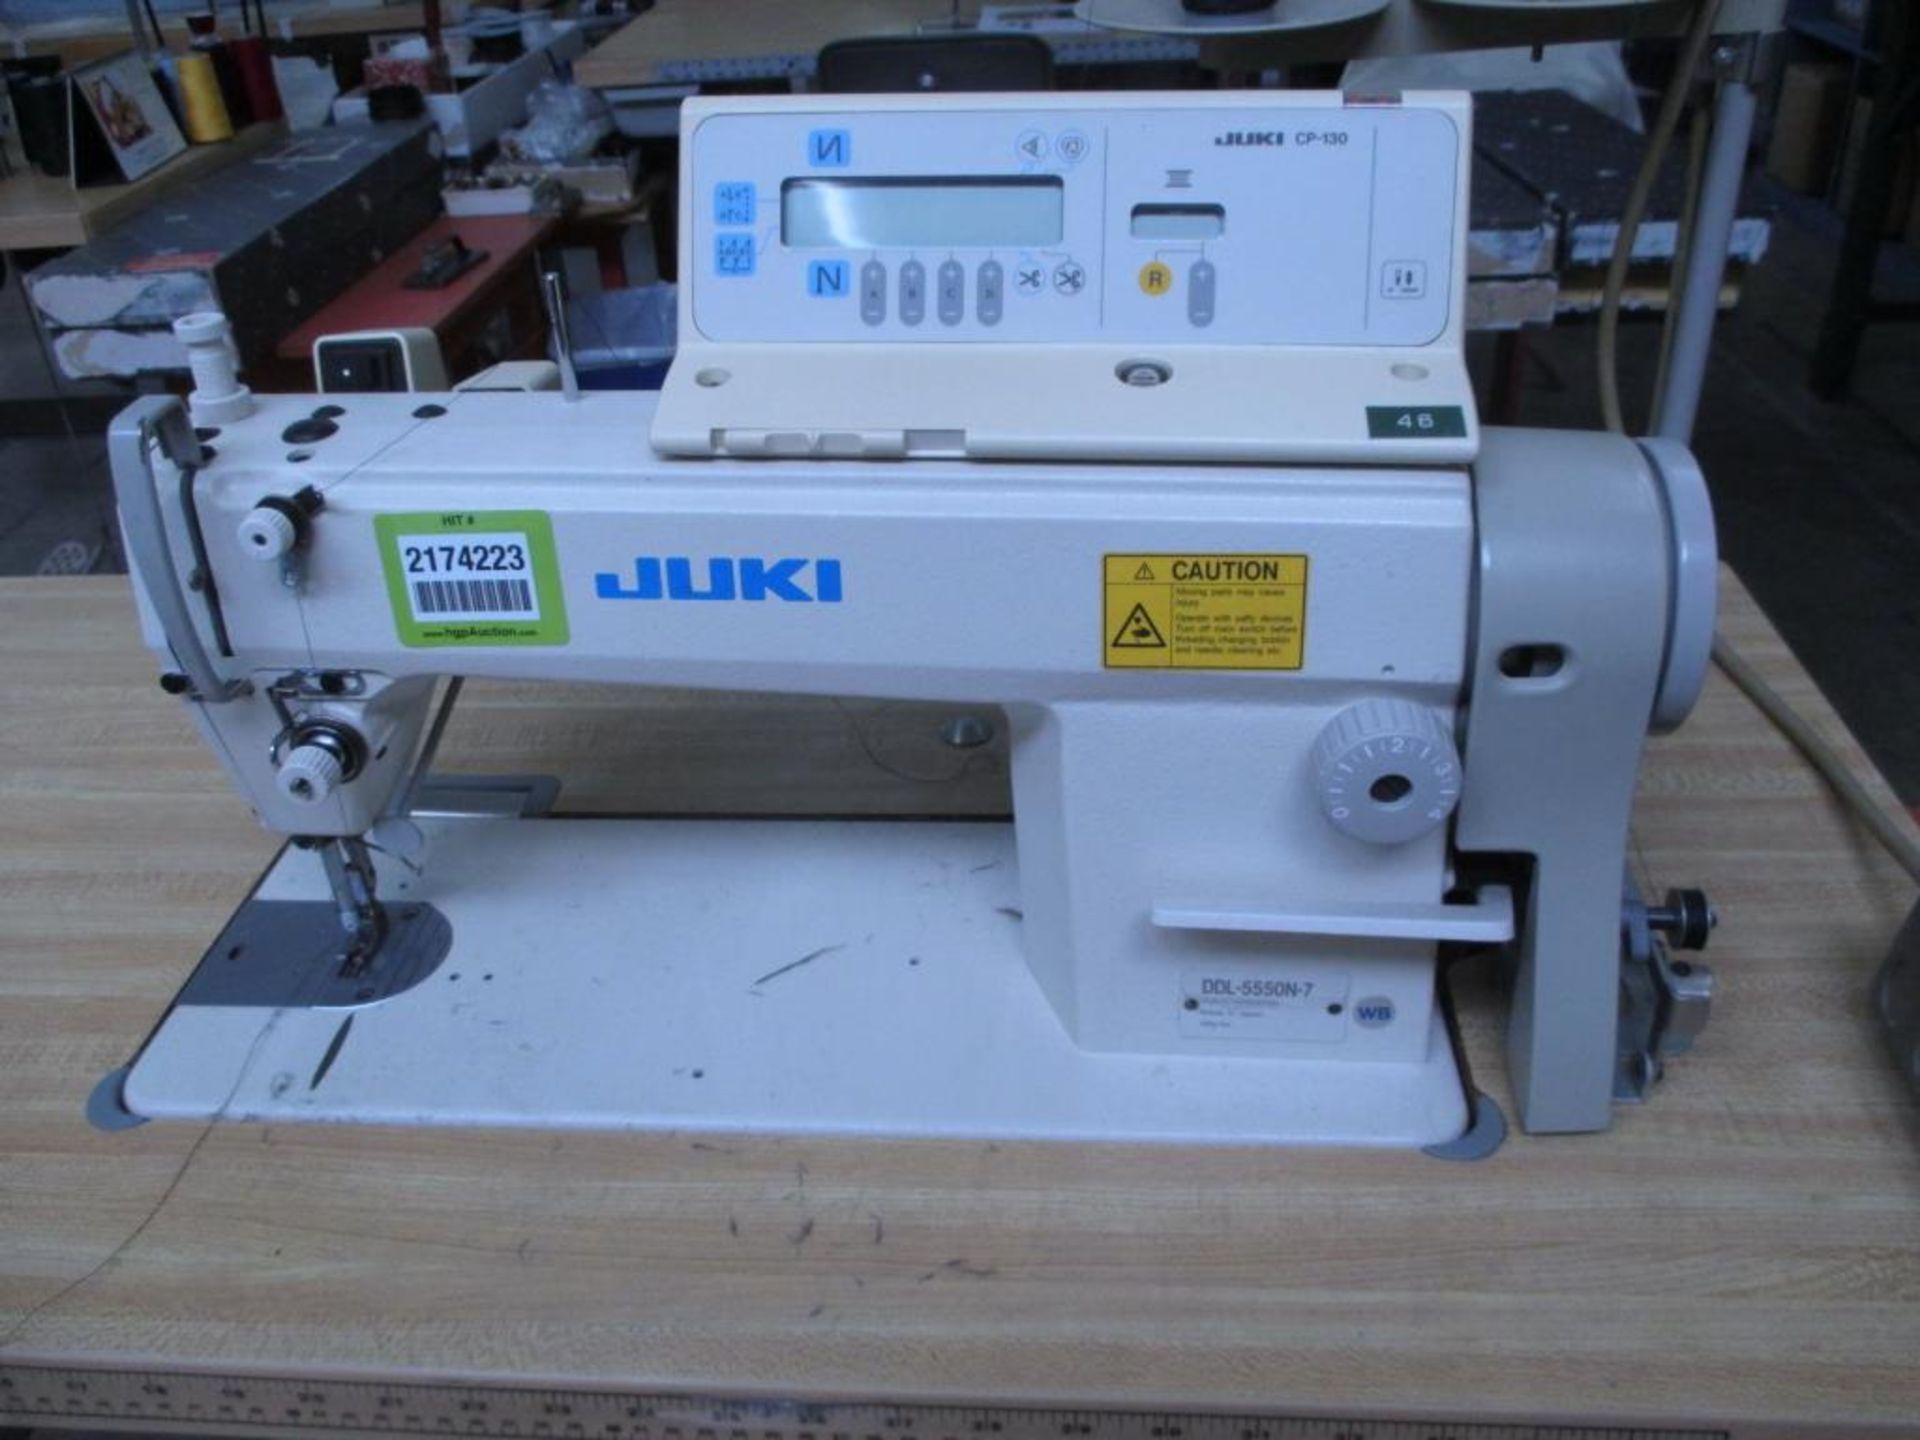 Lockstitch Reverse Industrial Sewing Machine. Juki DDL-5550N-7 1-Needle Lockstitch Reverse - Image 2 of 10